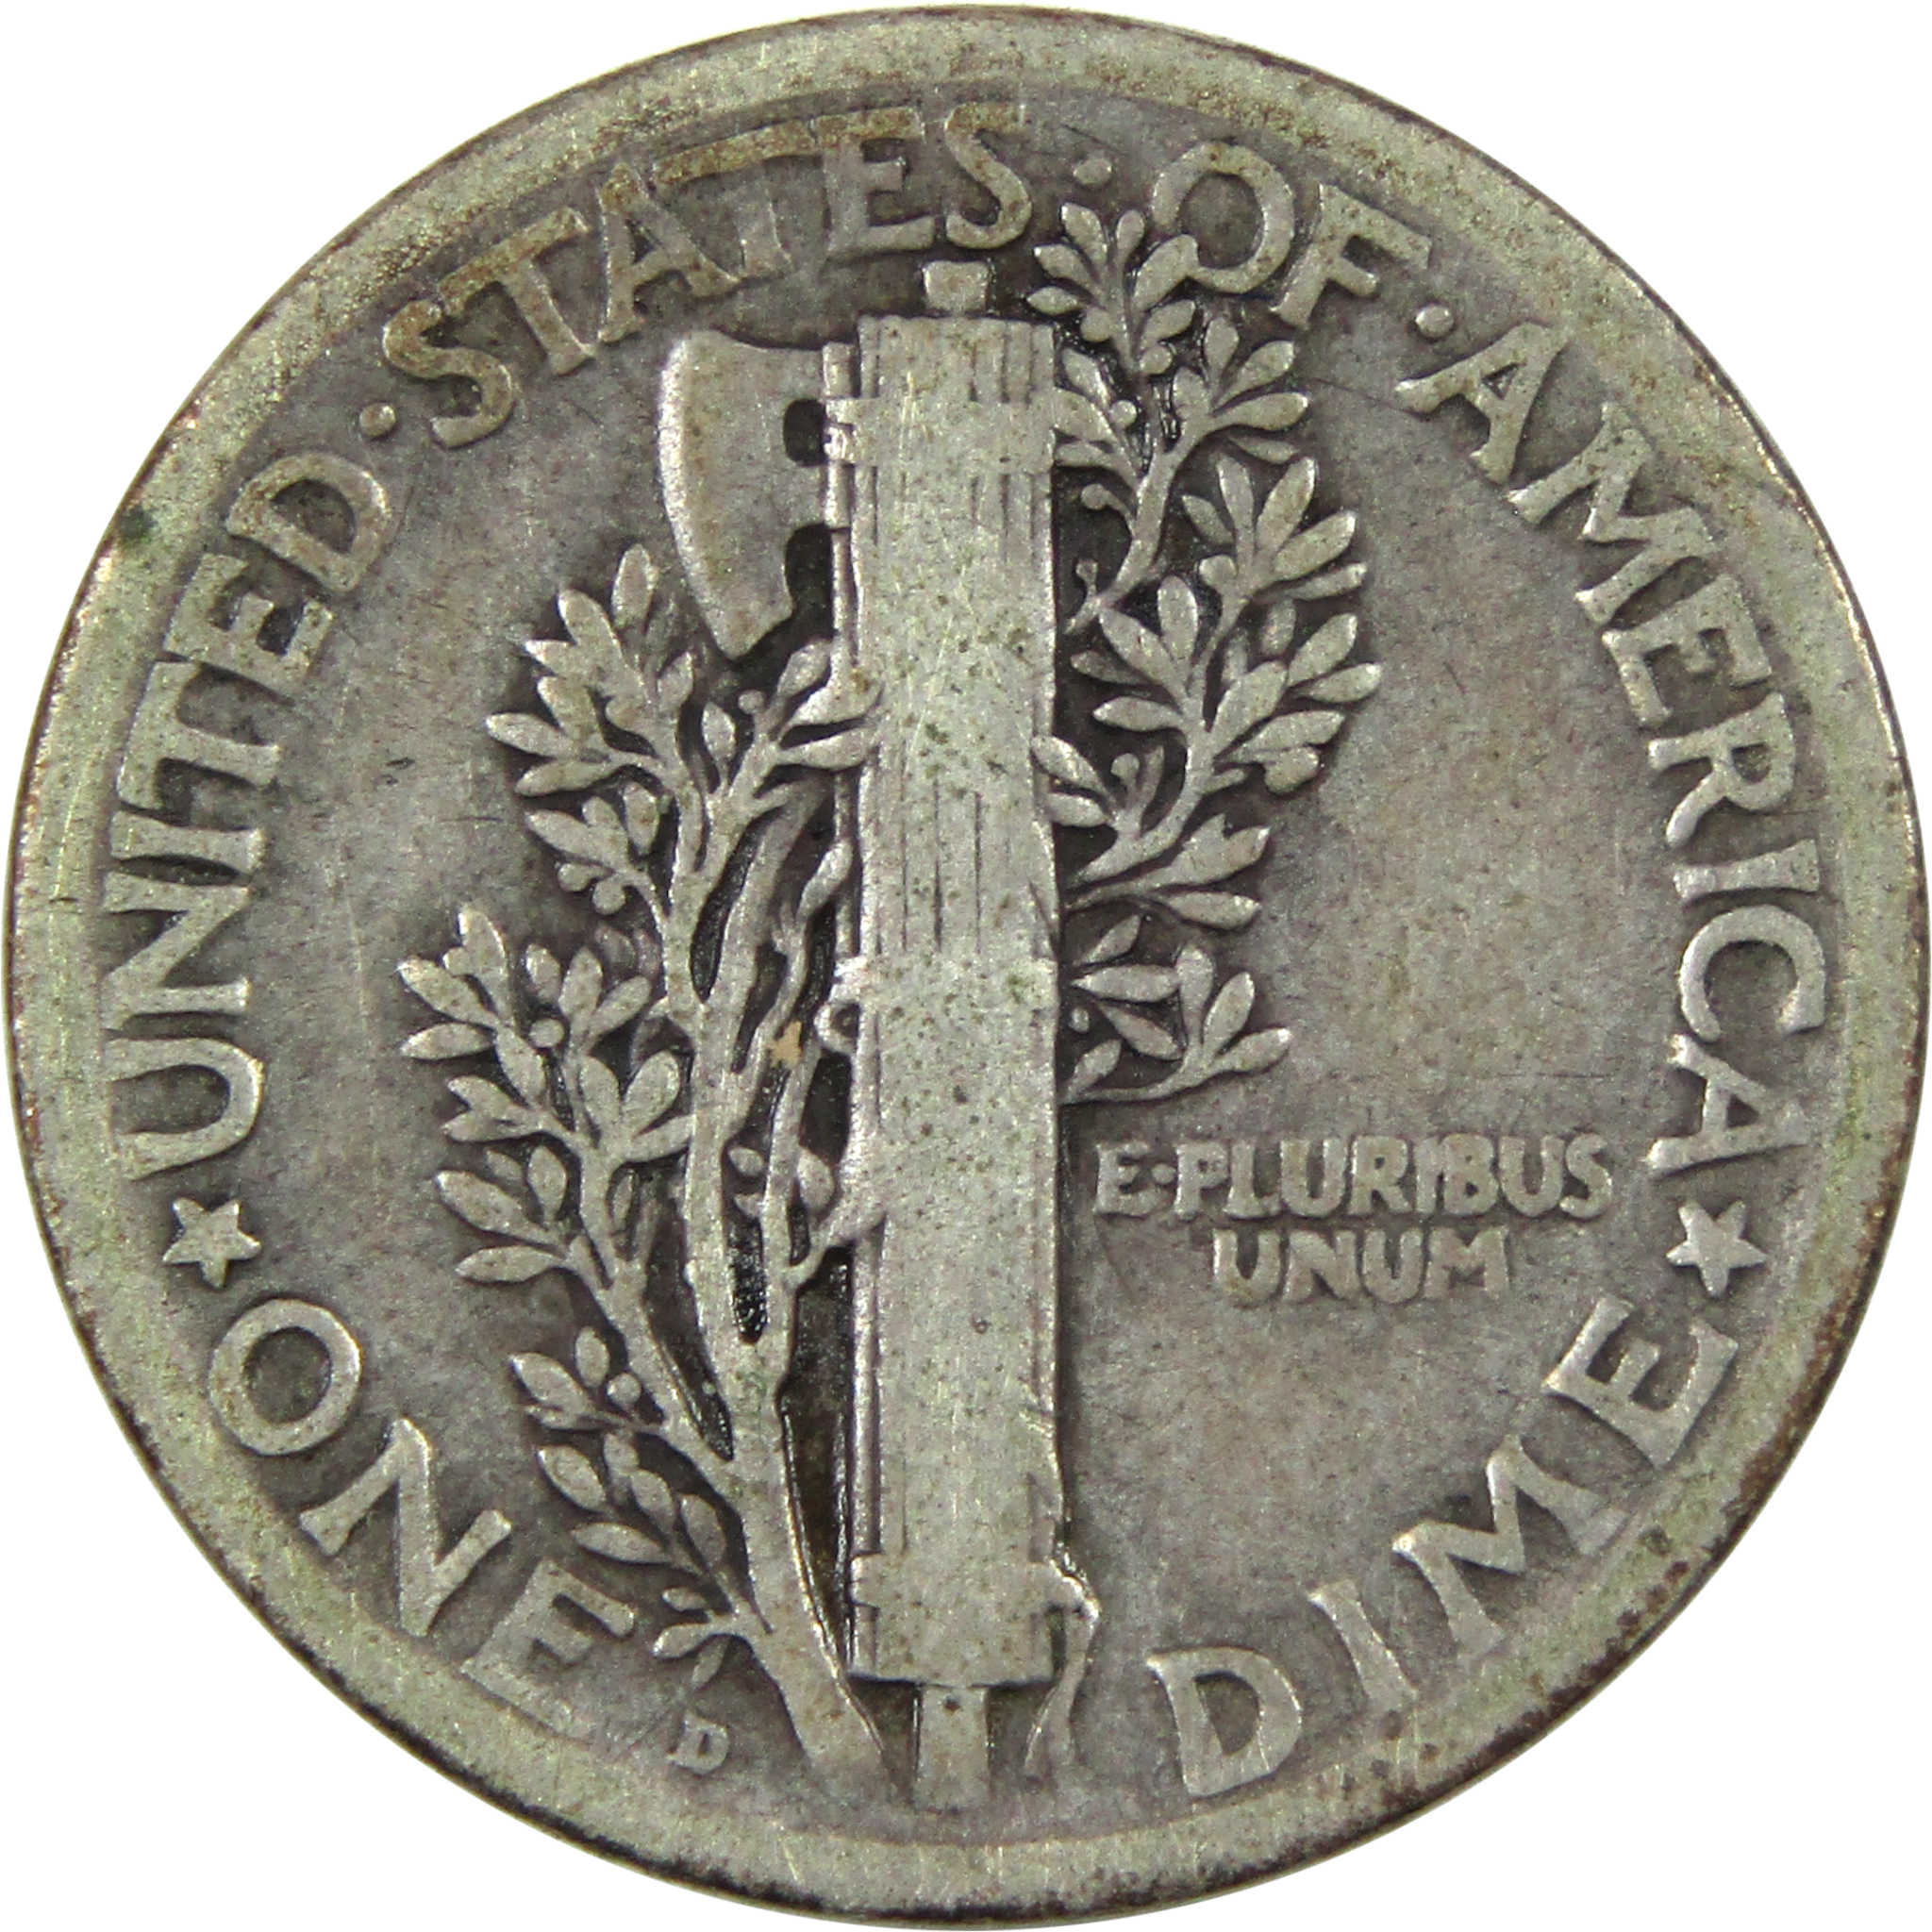 1921 D Mercury Dime VG Very Good Silver 10c Coin SKU:I14064